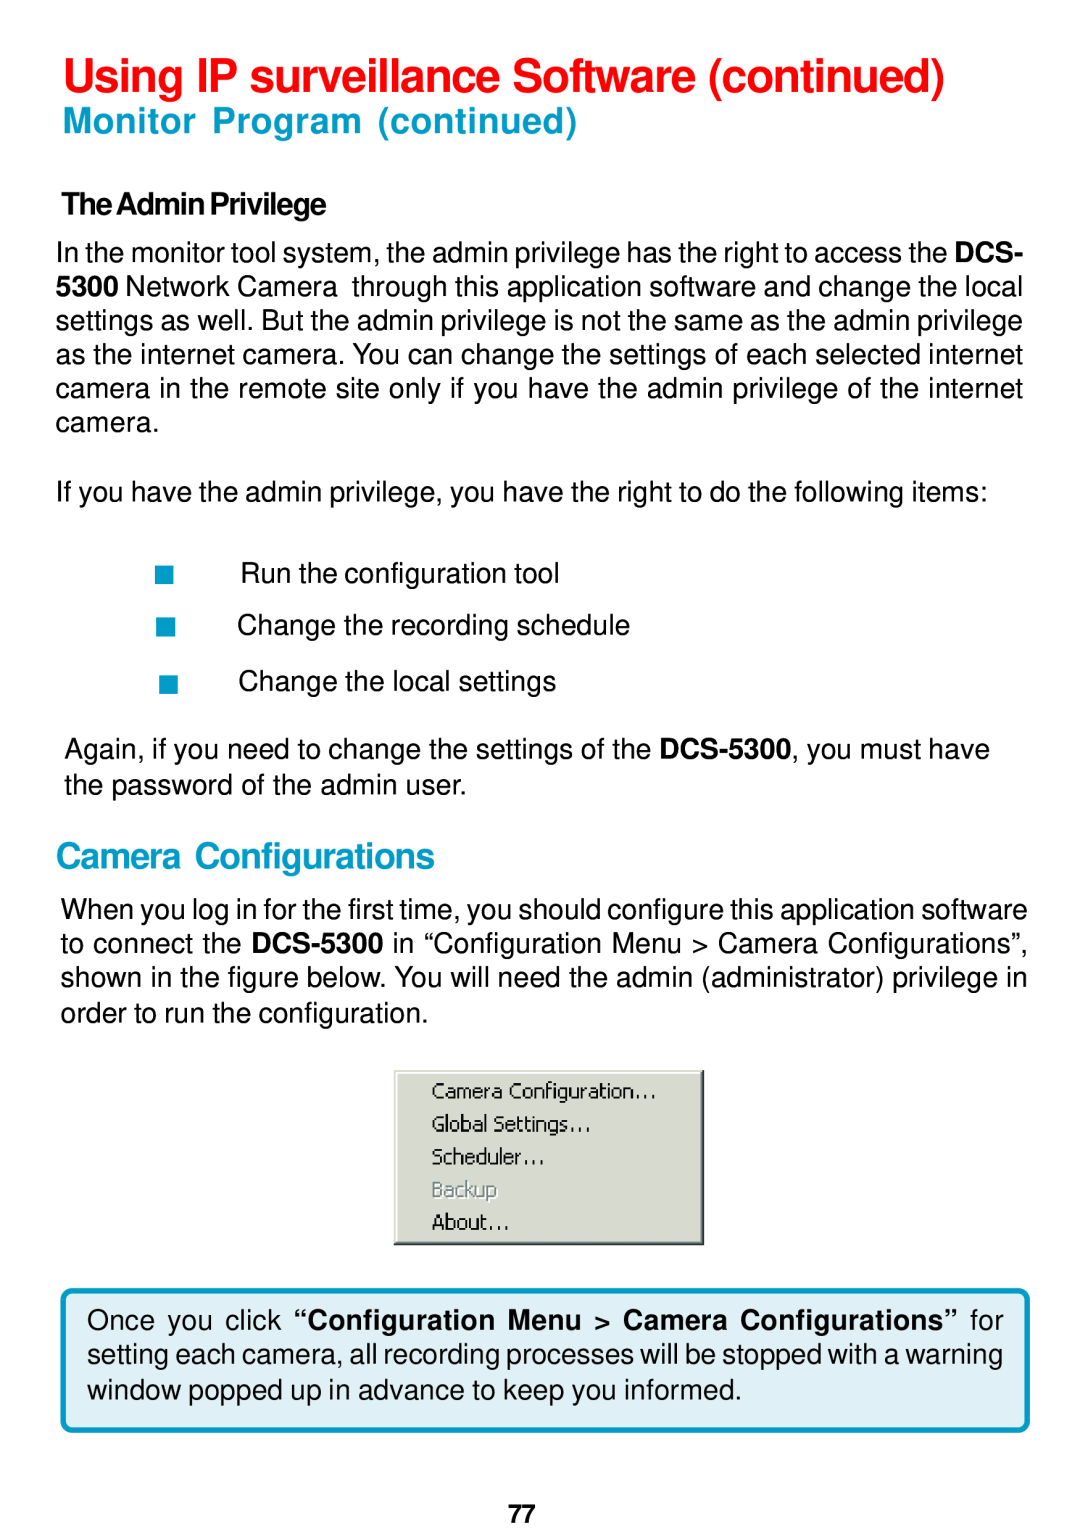 D-Link DCS-5300 manual Camera Configurations, TheAdmin Privilege, Using IP surveillance Software continued 